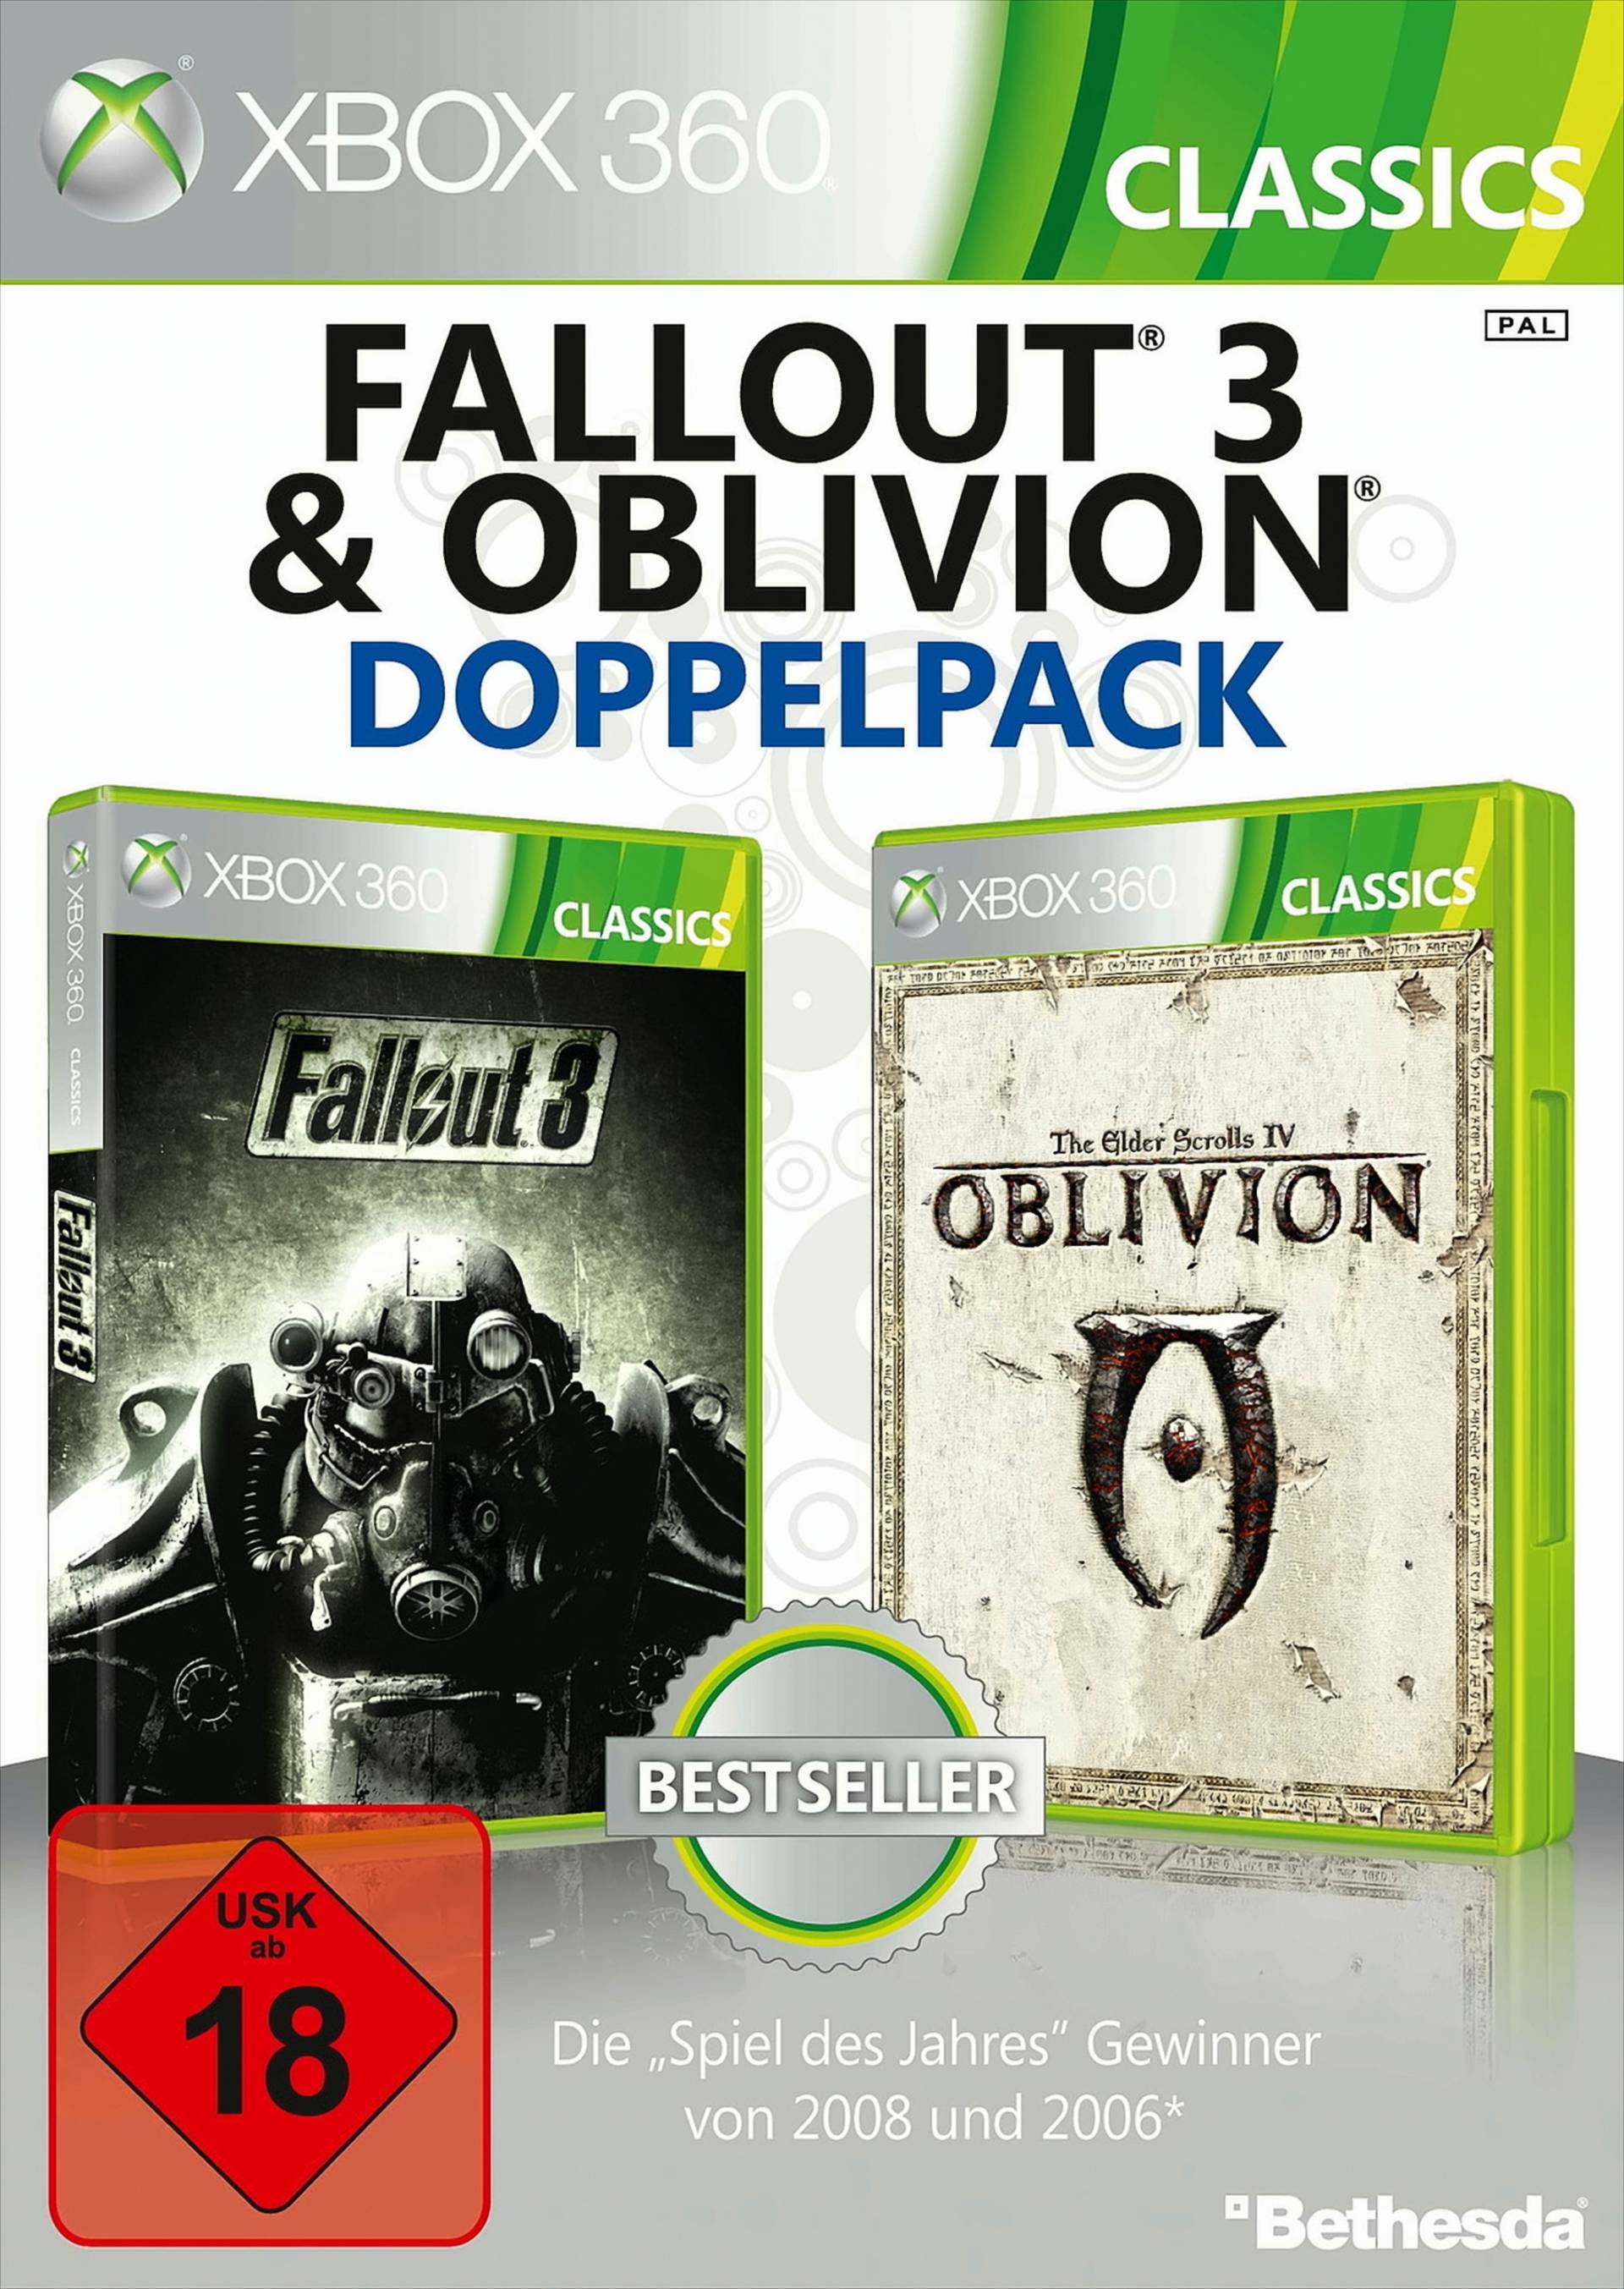 Fallout 3 & The Elder Scrolls IV: Oblivion - Doppelpack von Bethesda